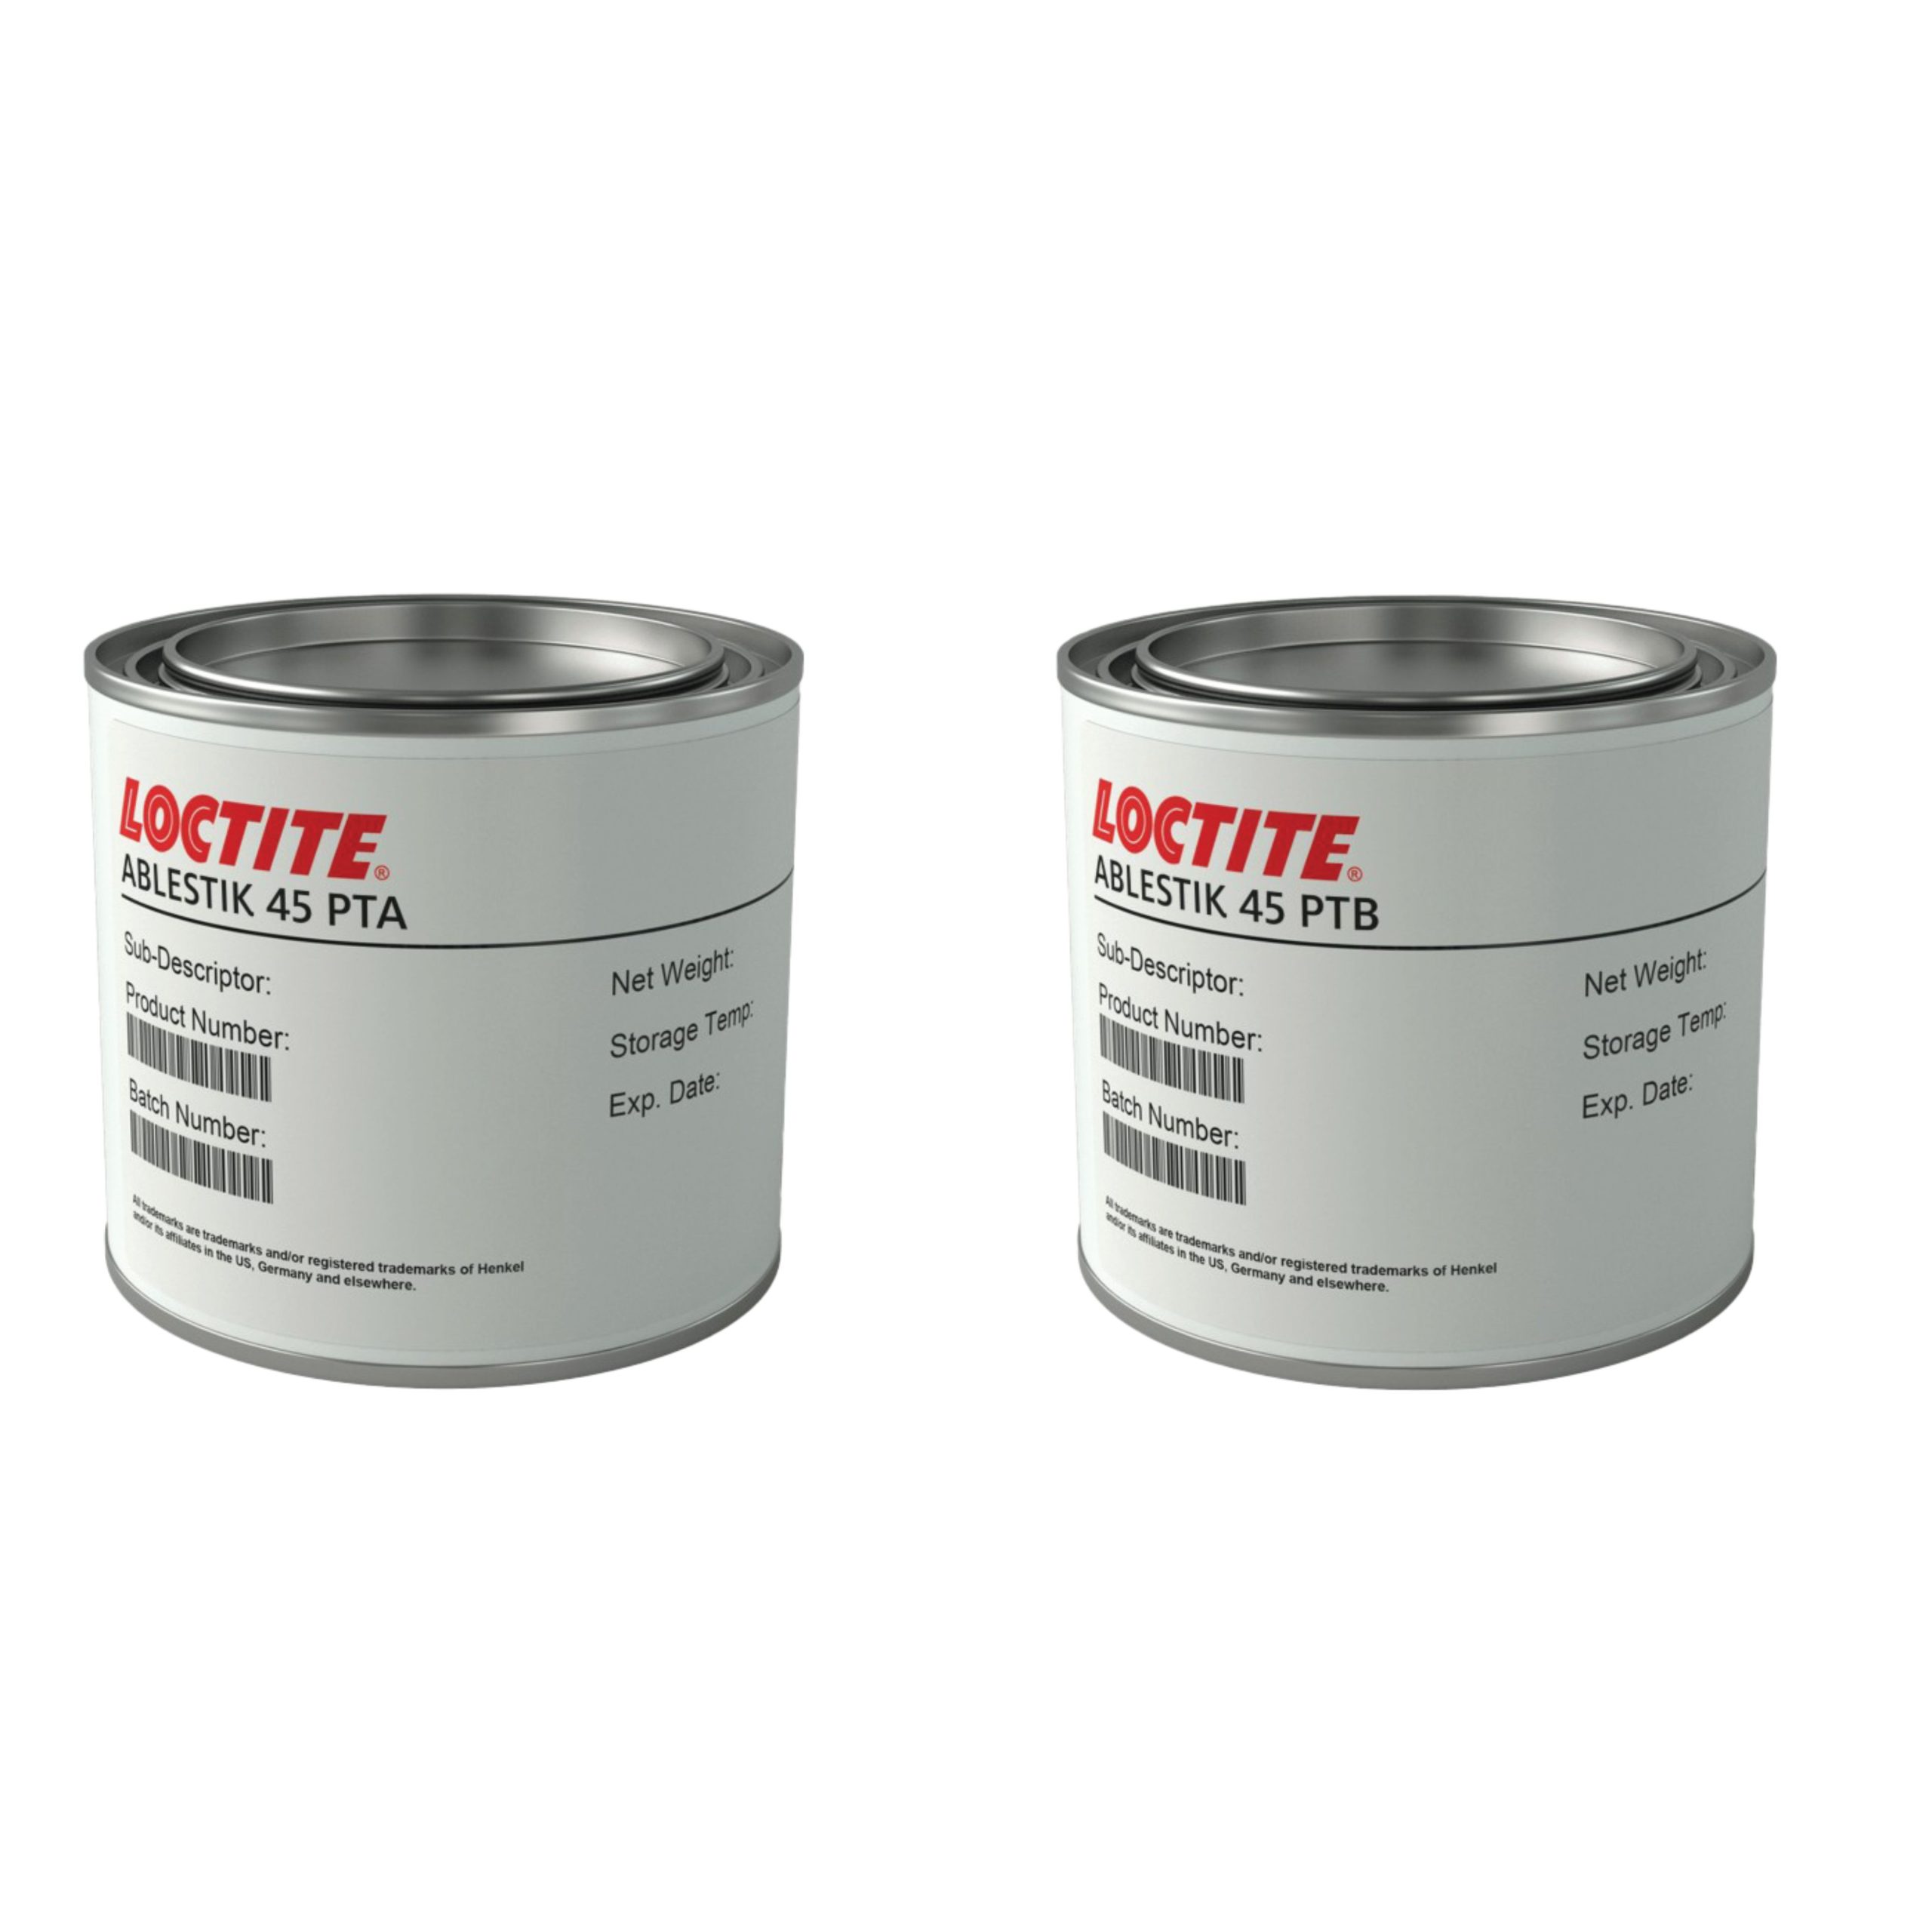 Brand: Henkel Loctite 401 Instant Adhesive, White, Tube